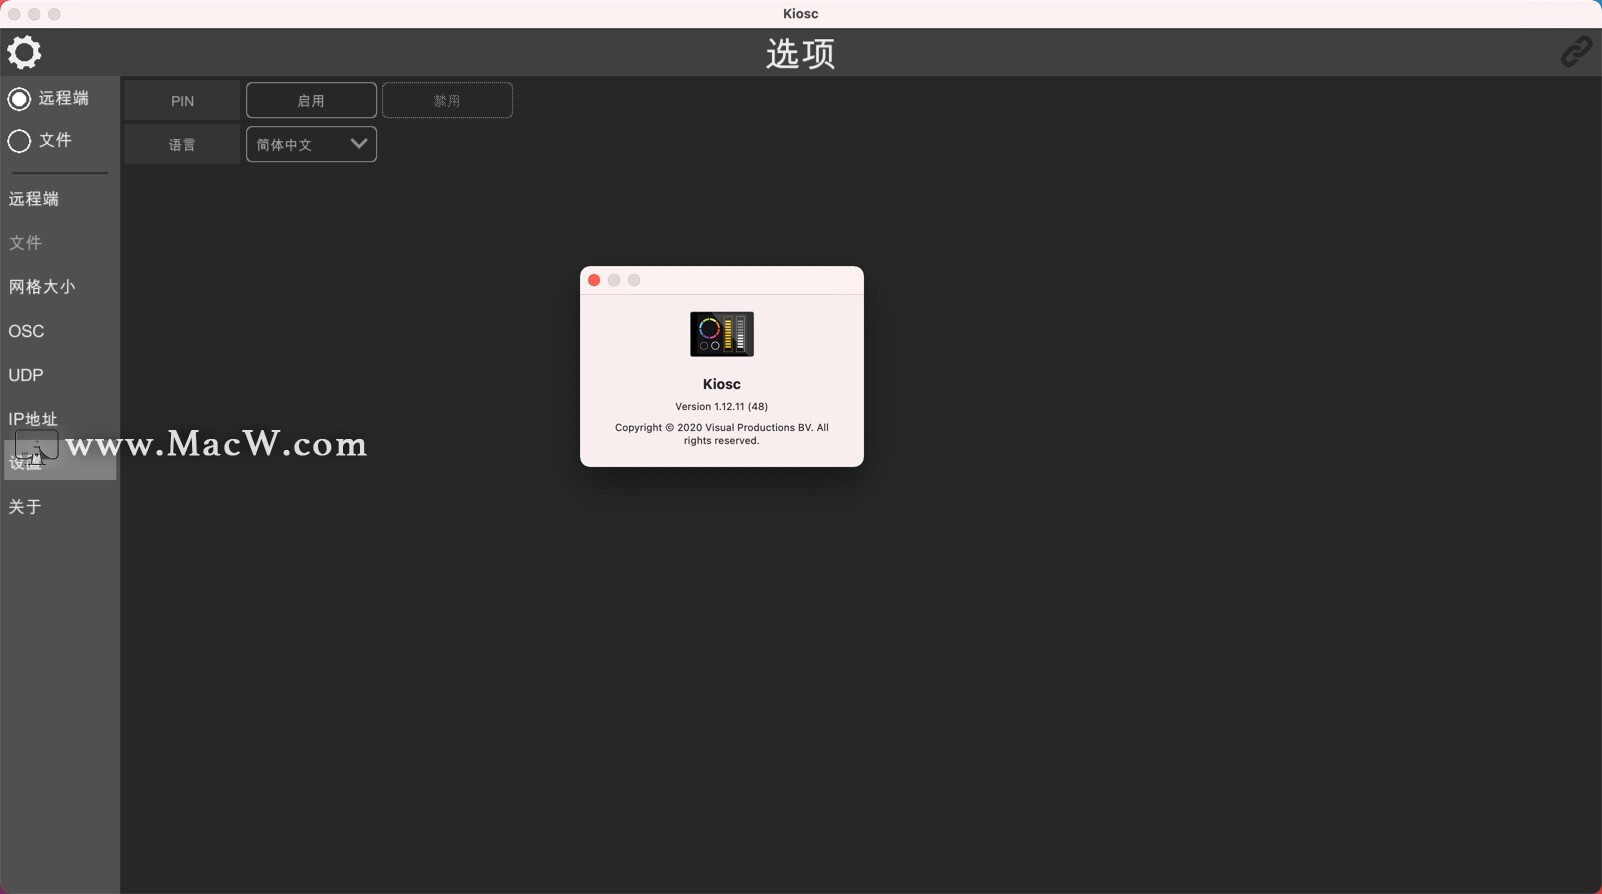 mac远程控制应用 Kiosc 1.12.11 中文版 - 图1